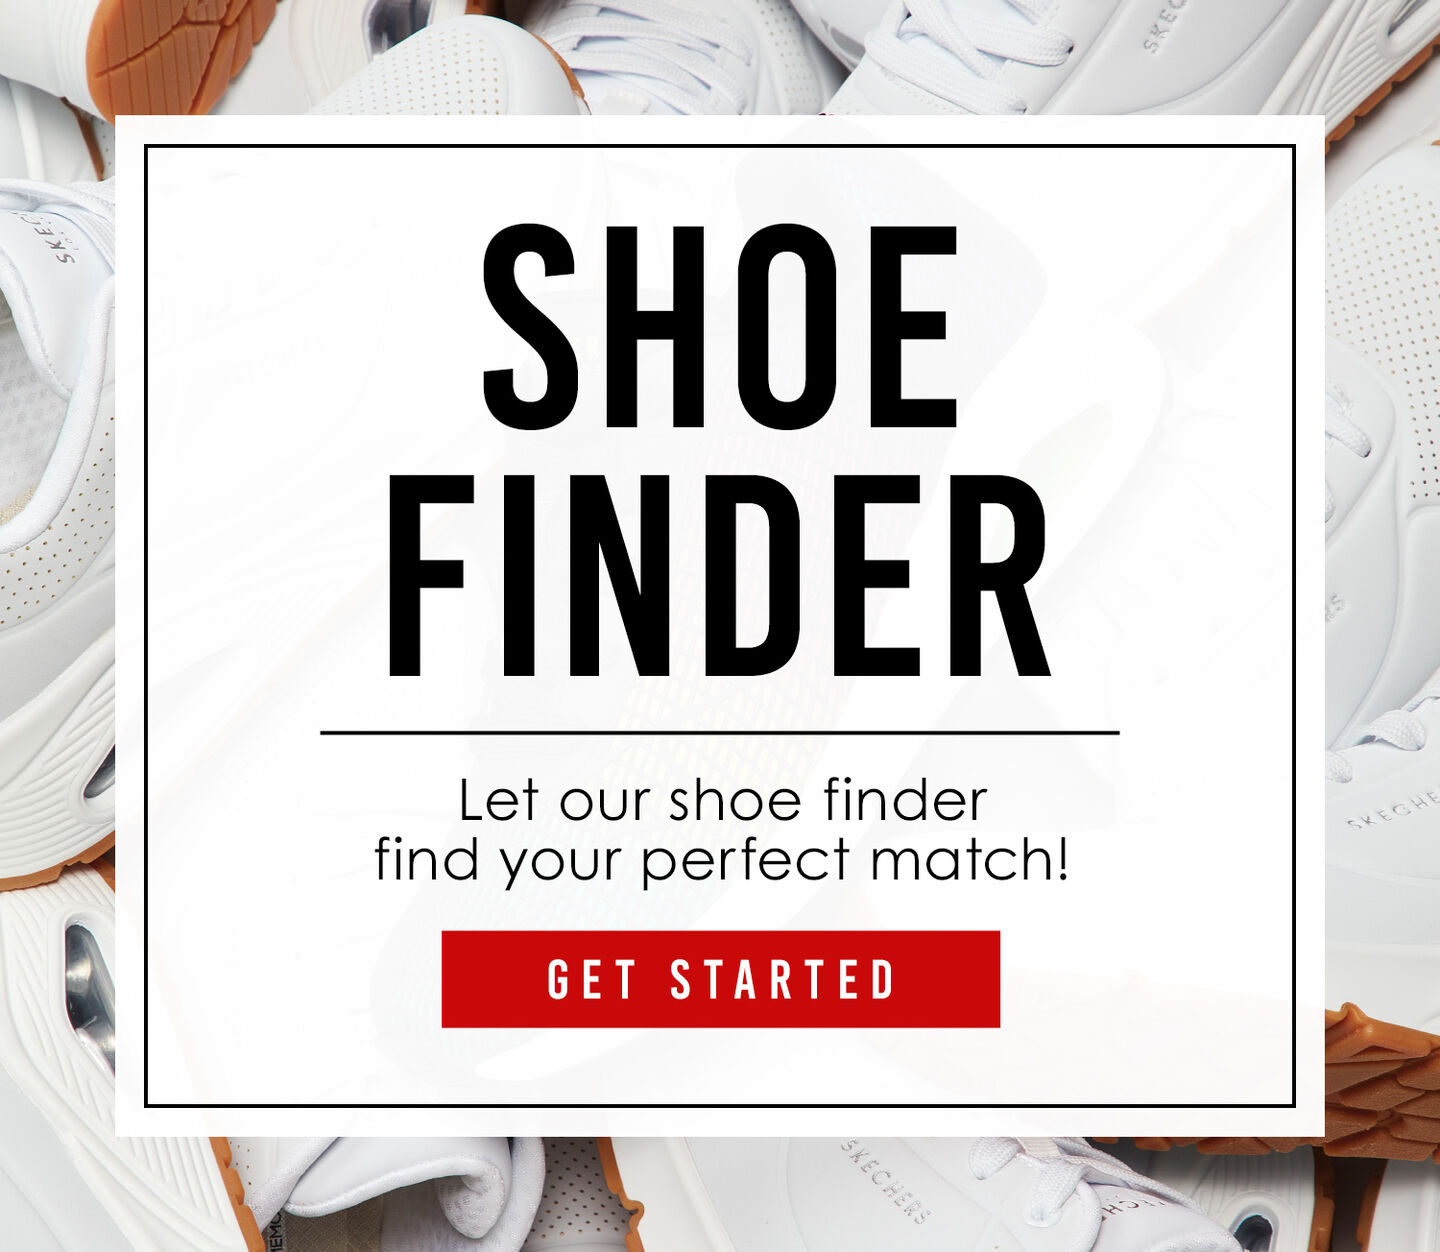 Shoe Finder - Let our Shoe Finder find your perfect match!  Get Started - image